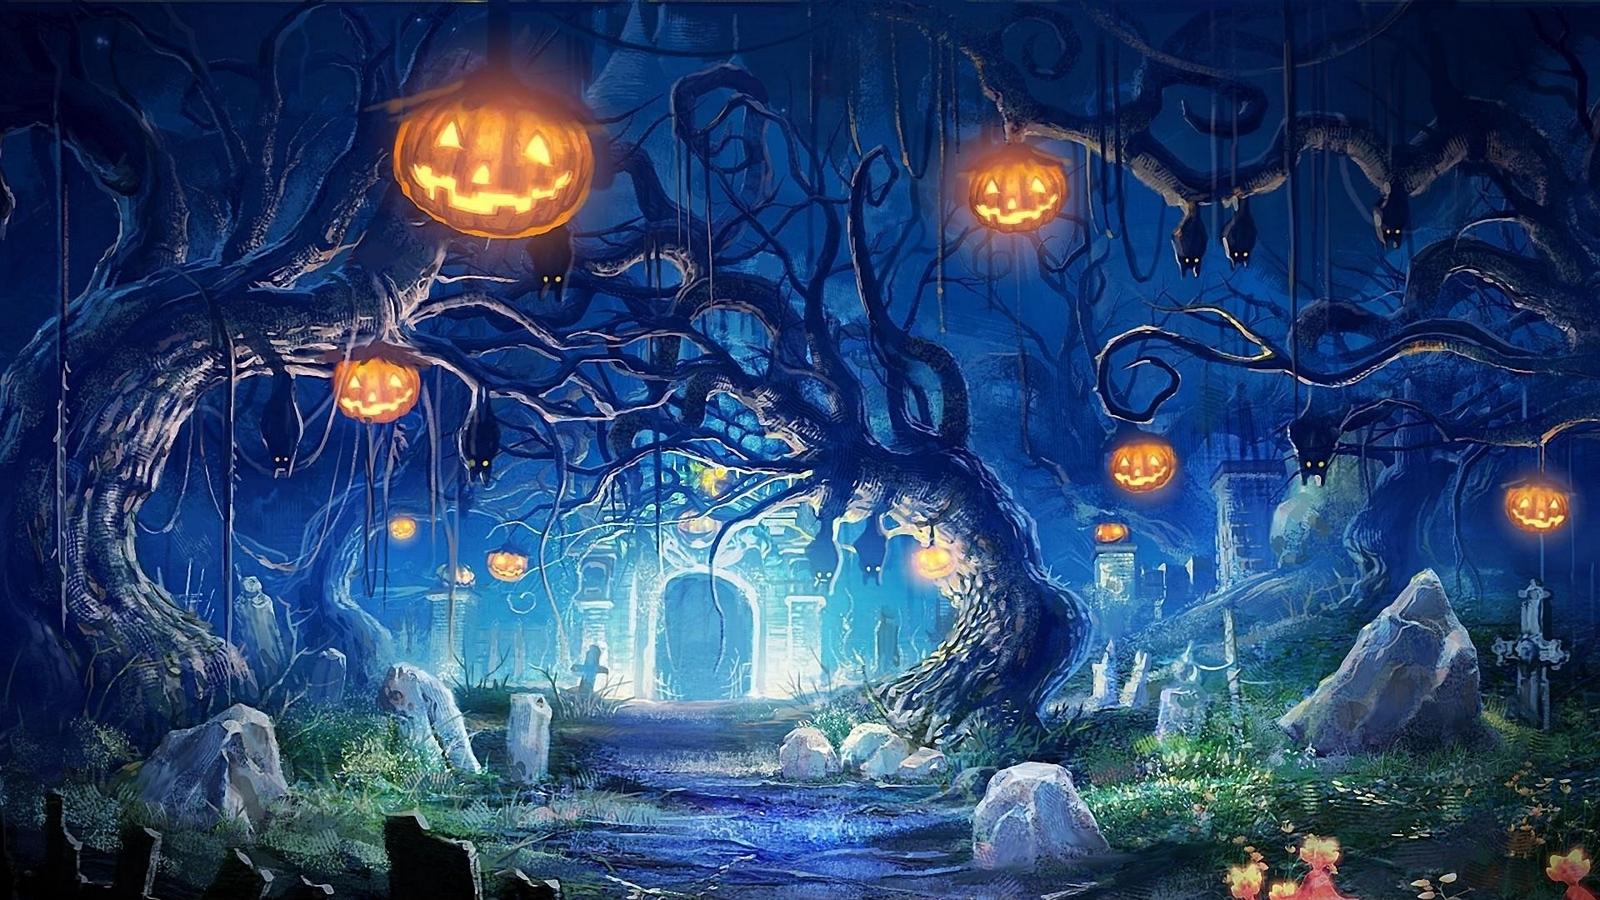 Download wallpaper 1600x900 halloween, holiday, castle